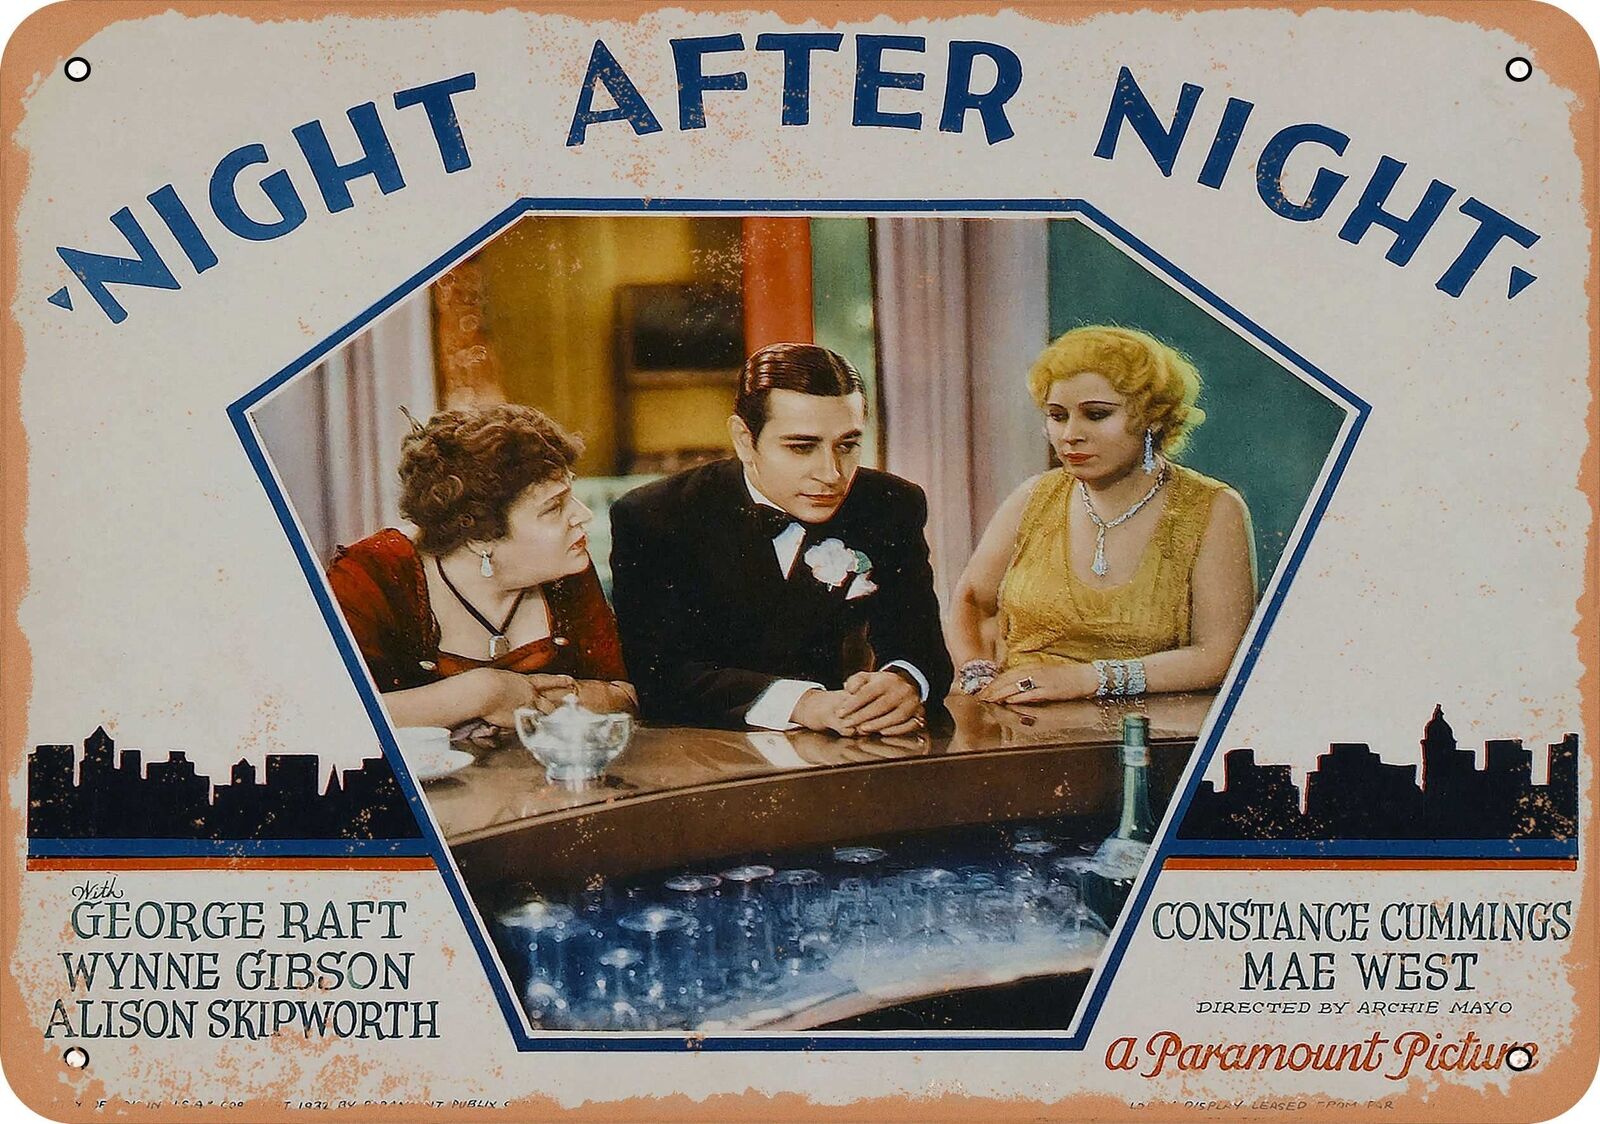 Metal Sign - Night After Night (1932) 1 - Vintage Look